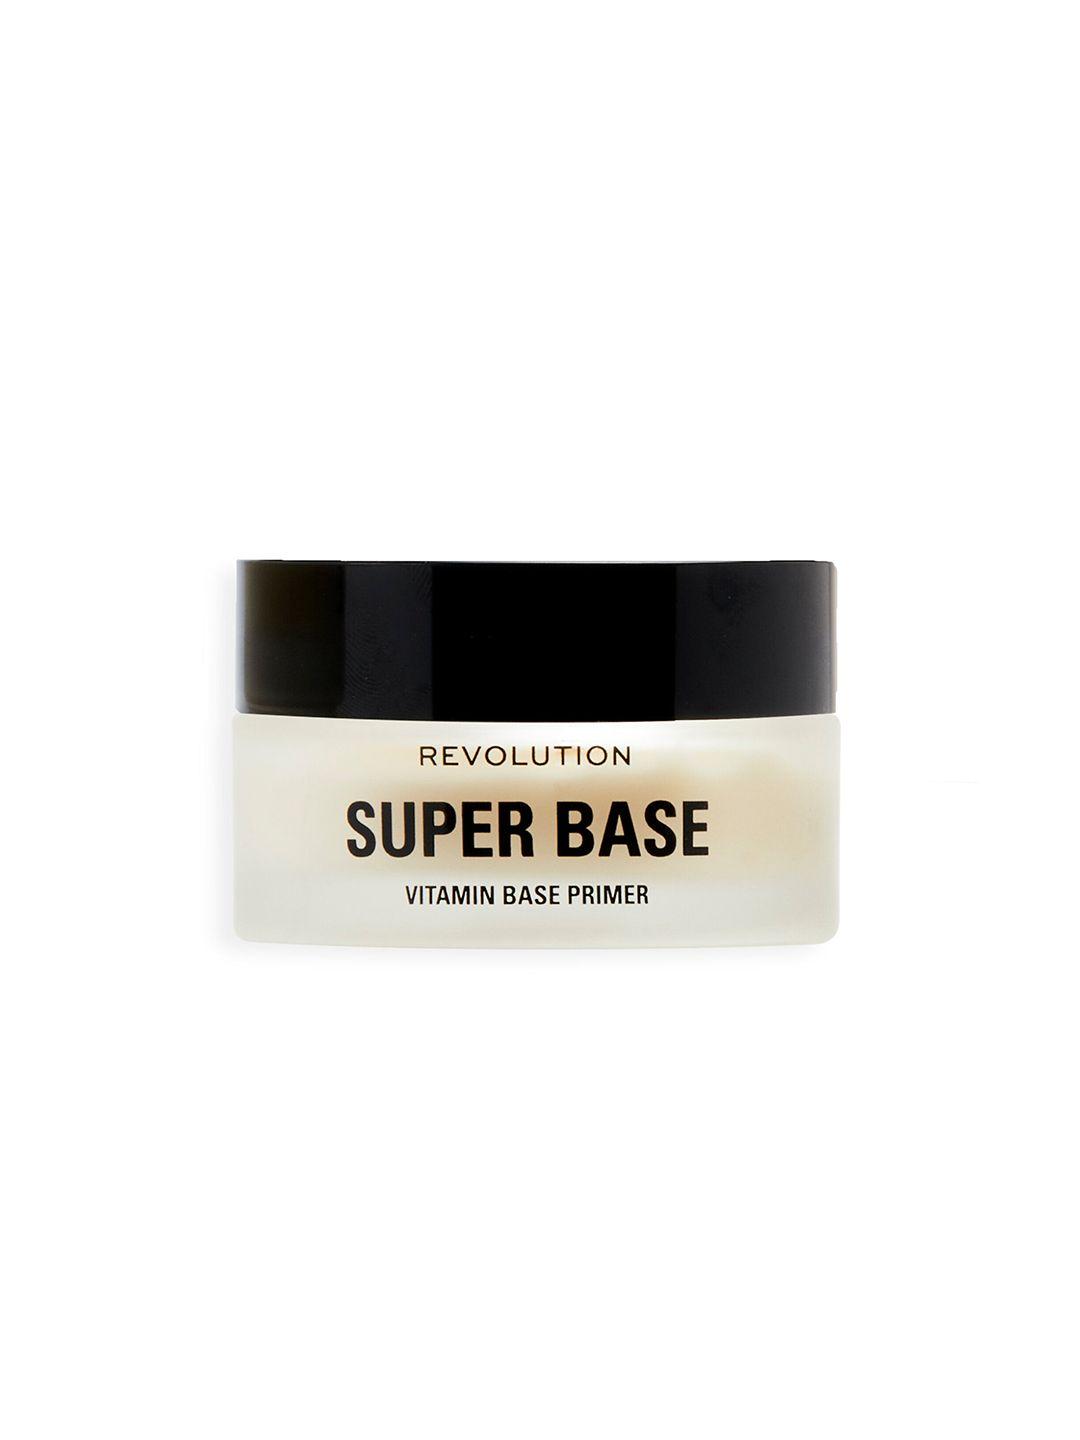 makeup revolution london super base vitamin base primer with shea butter - 25ml